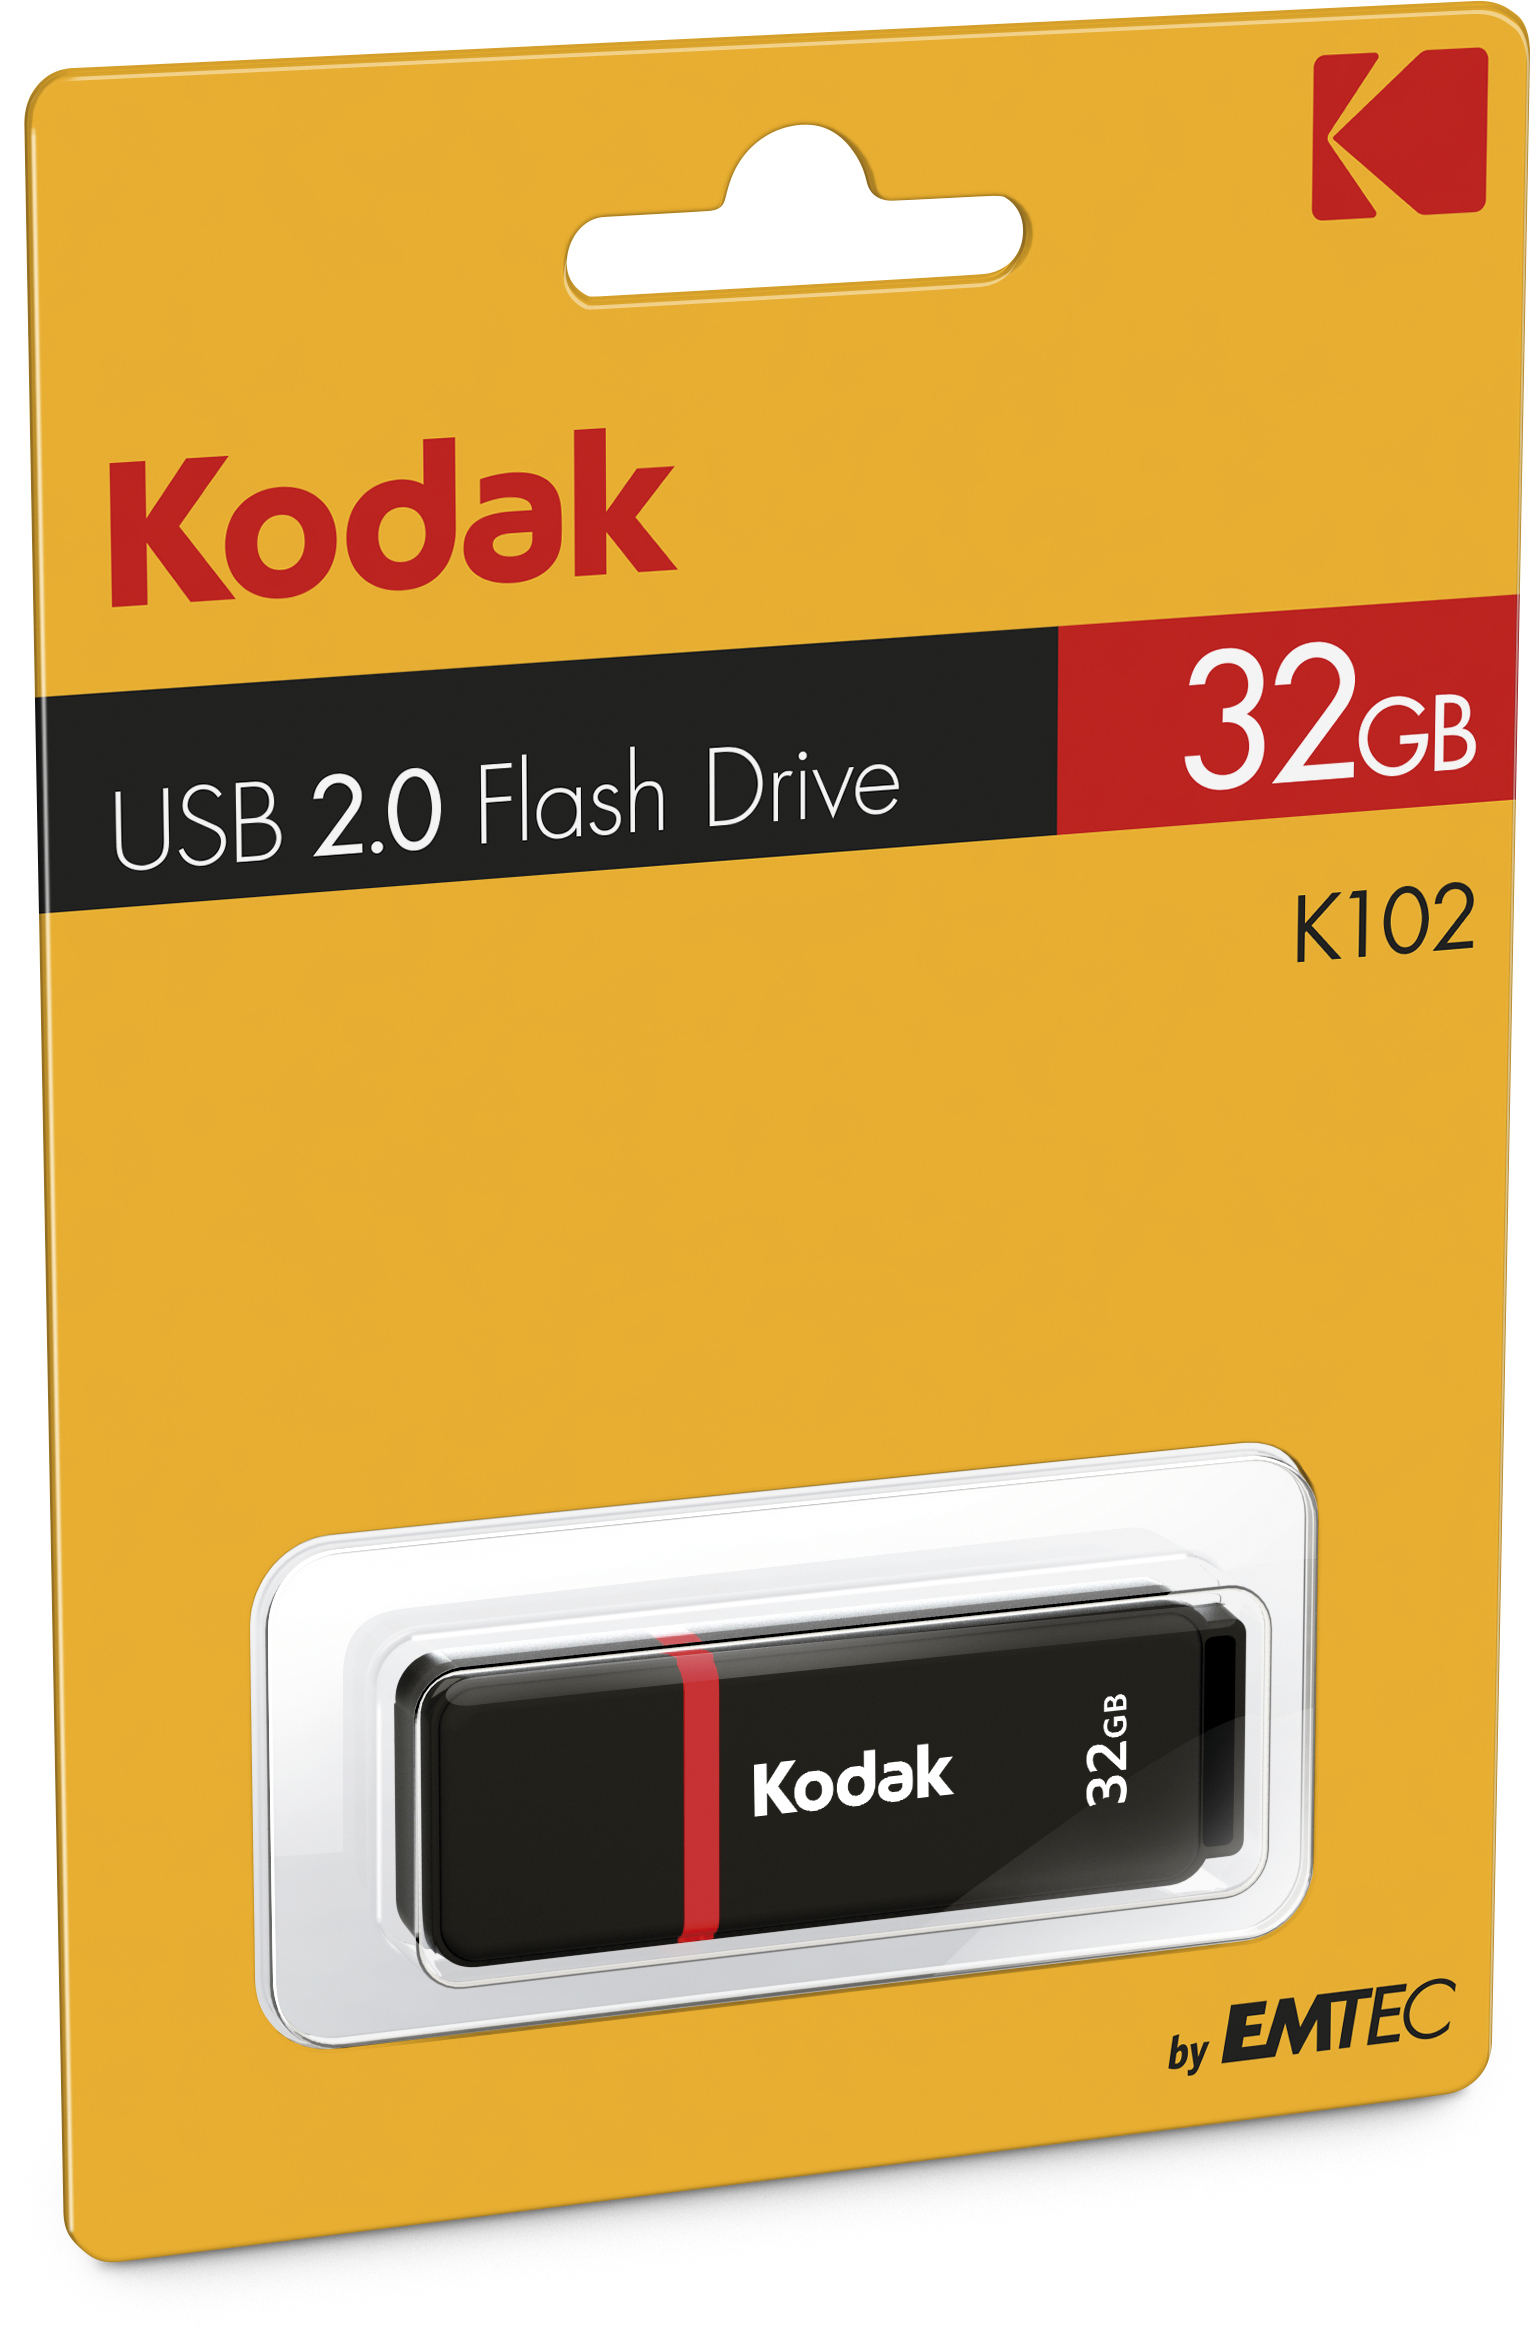 Kodak K100 32GB